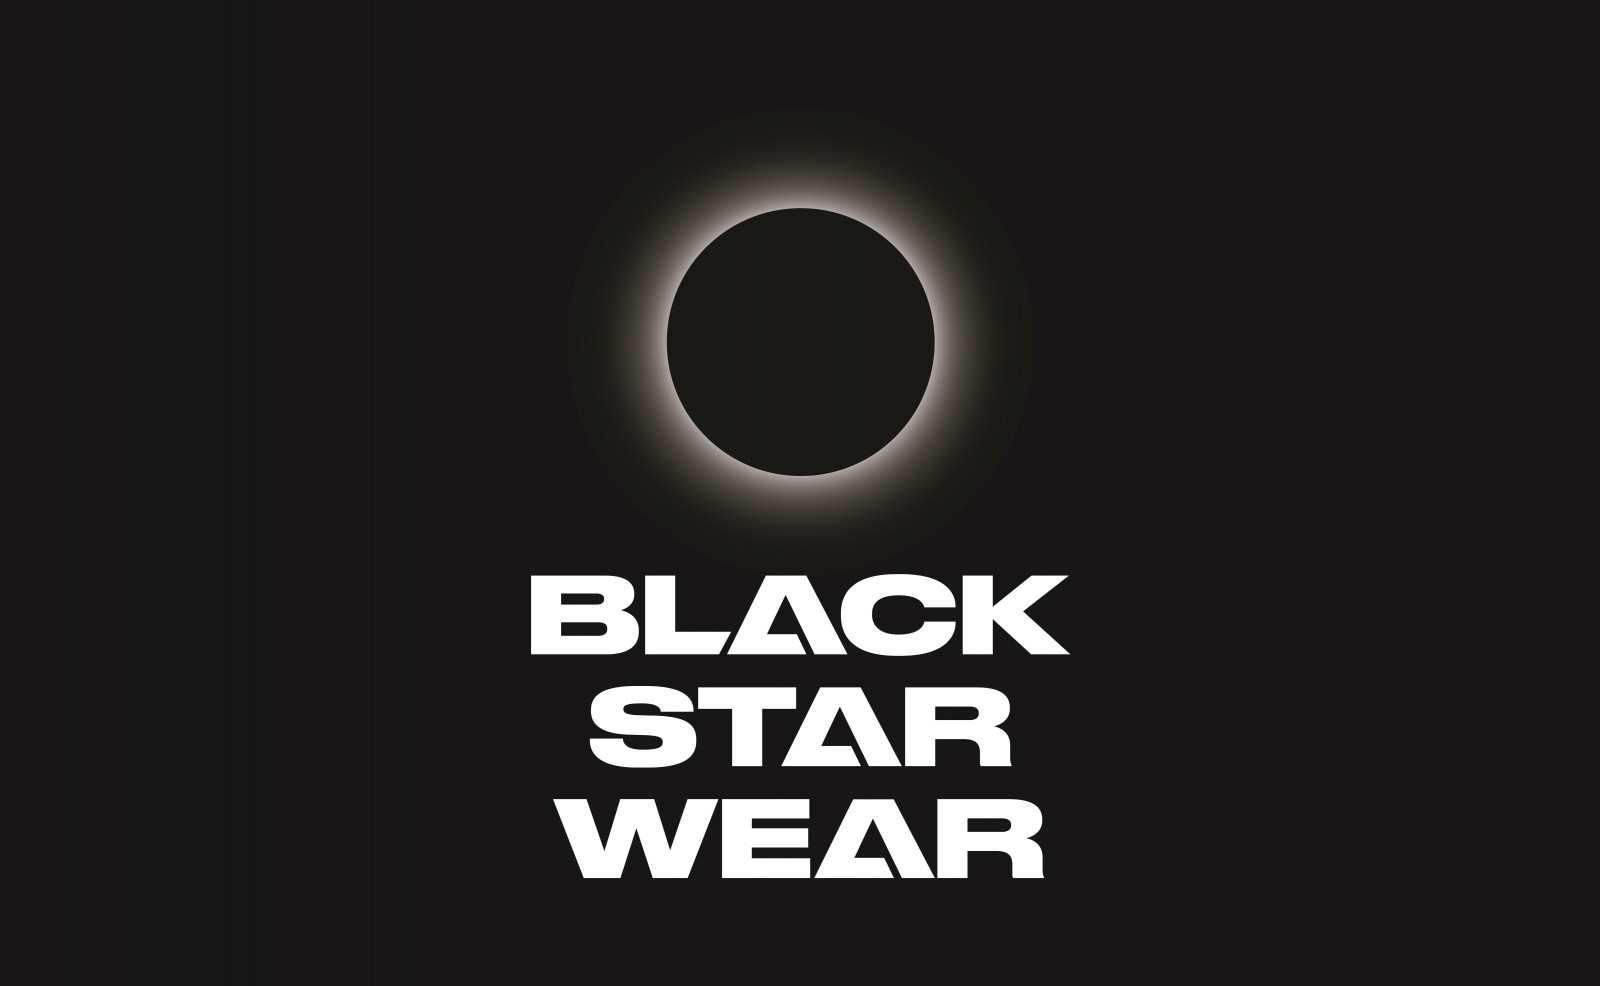 Black star wear